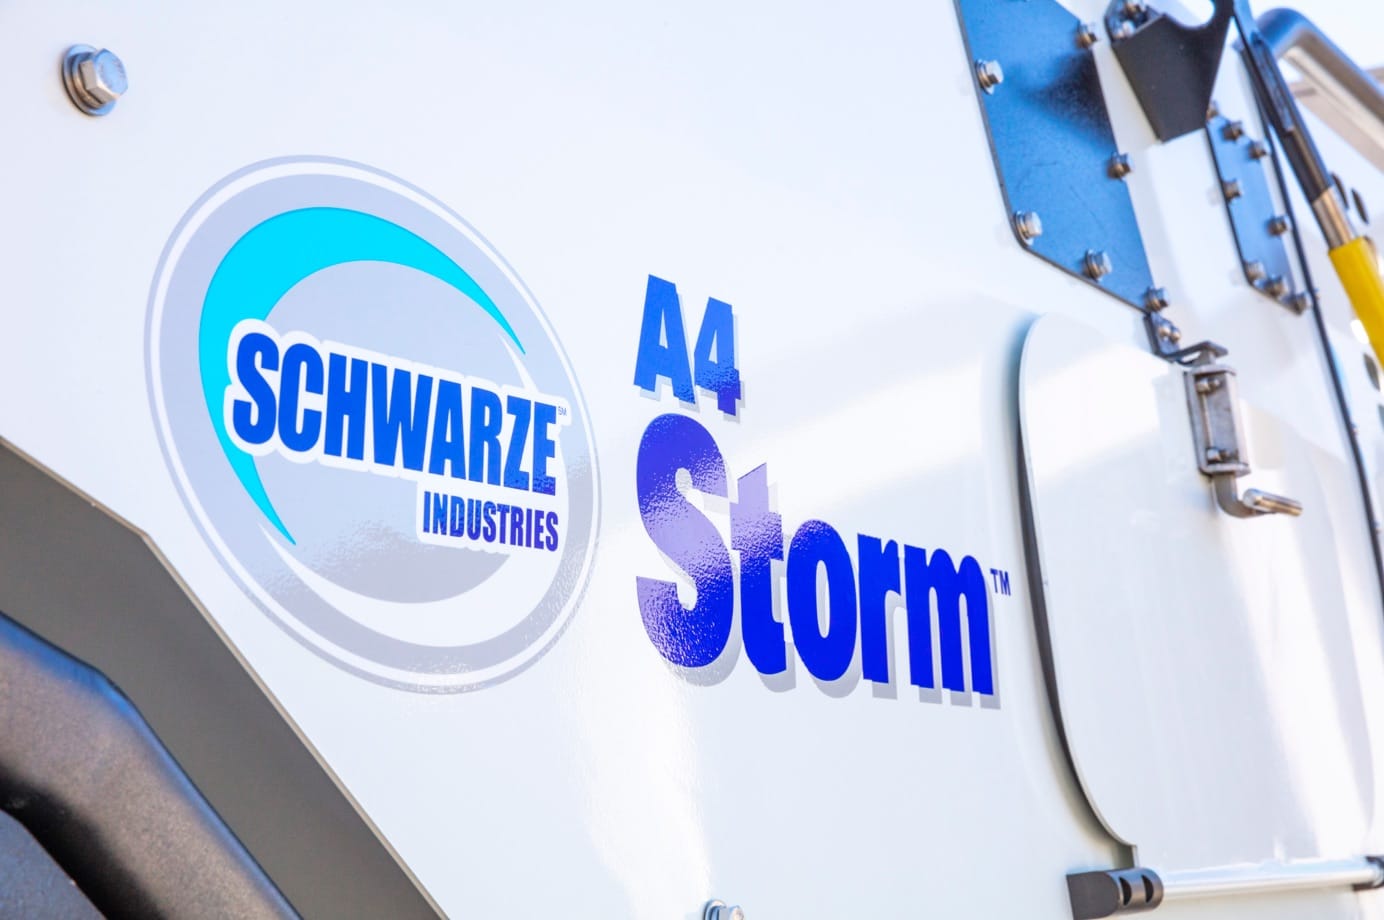 kor-Schwarze-A4-Storm-5